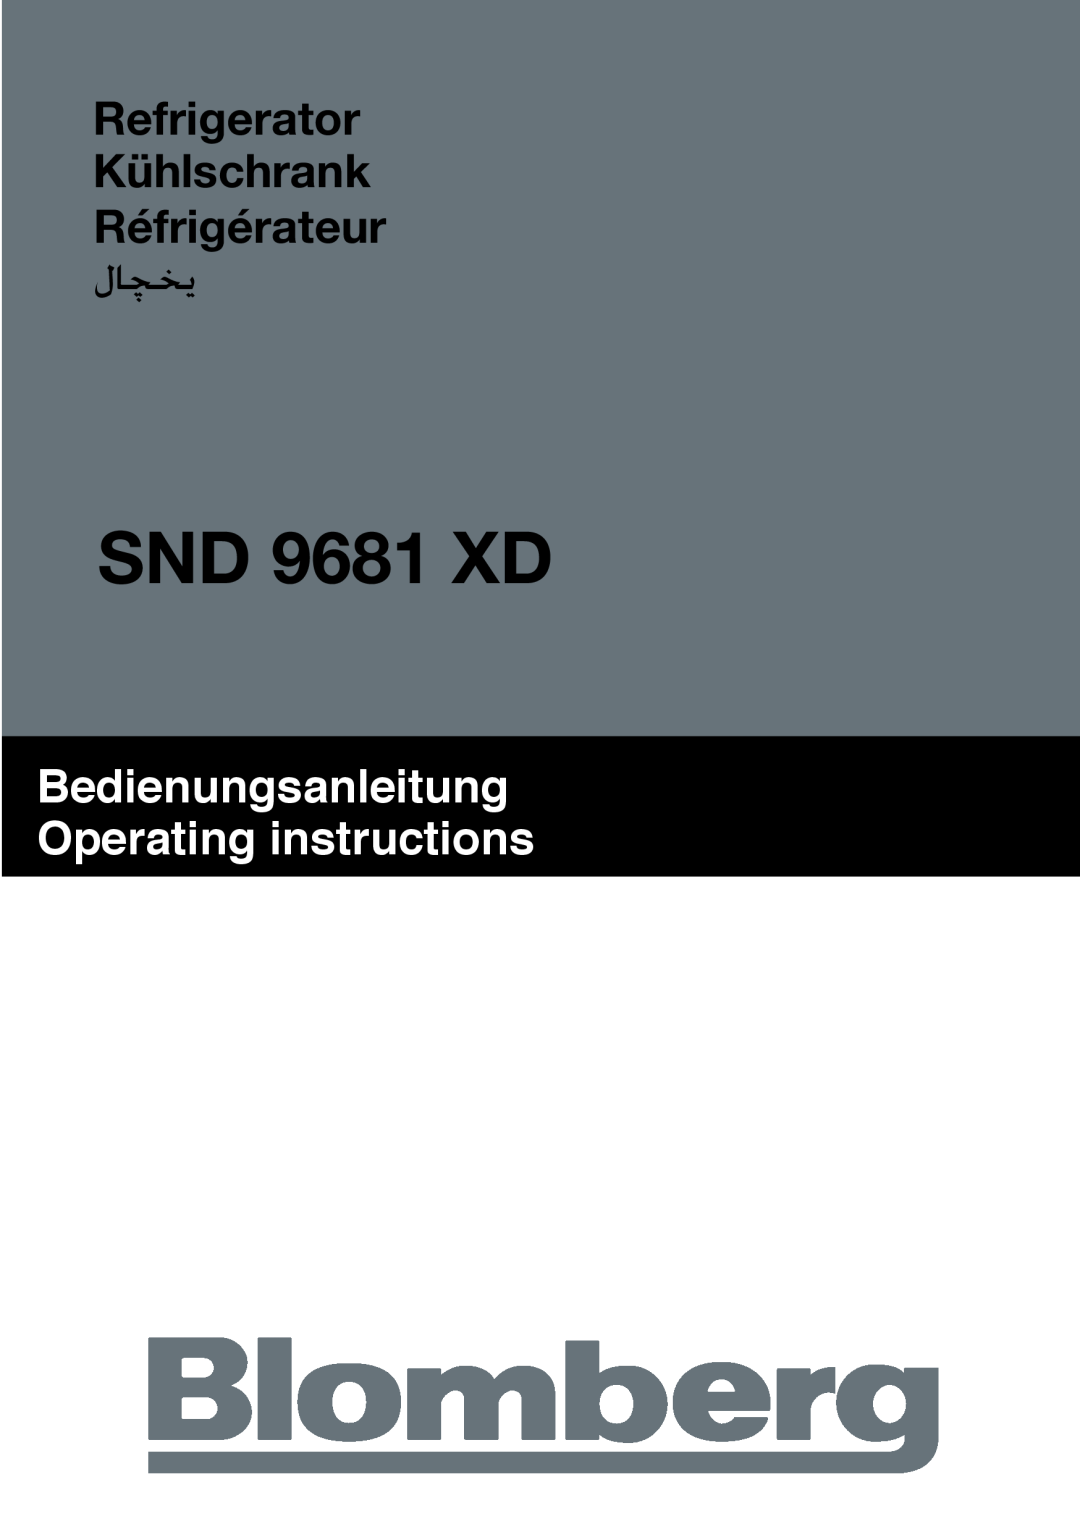 Blomberg SND 9681 XD operating instructions Refrigerator Kühlschrank Réfrigérateur, لاچخی 